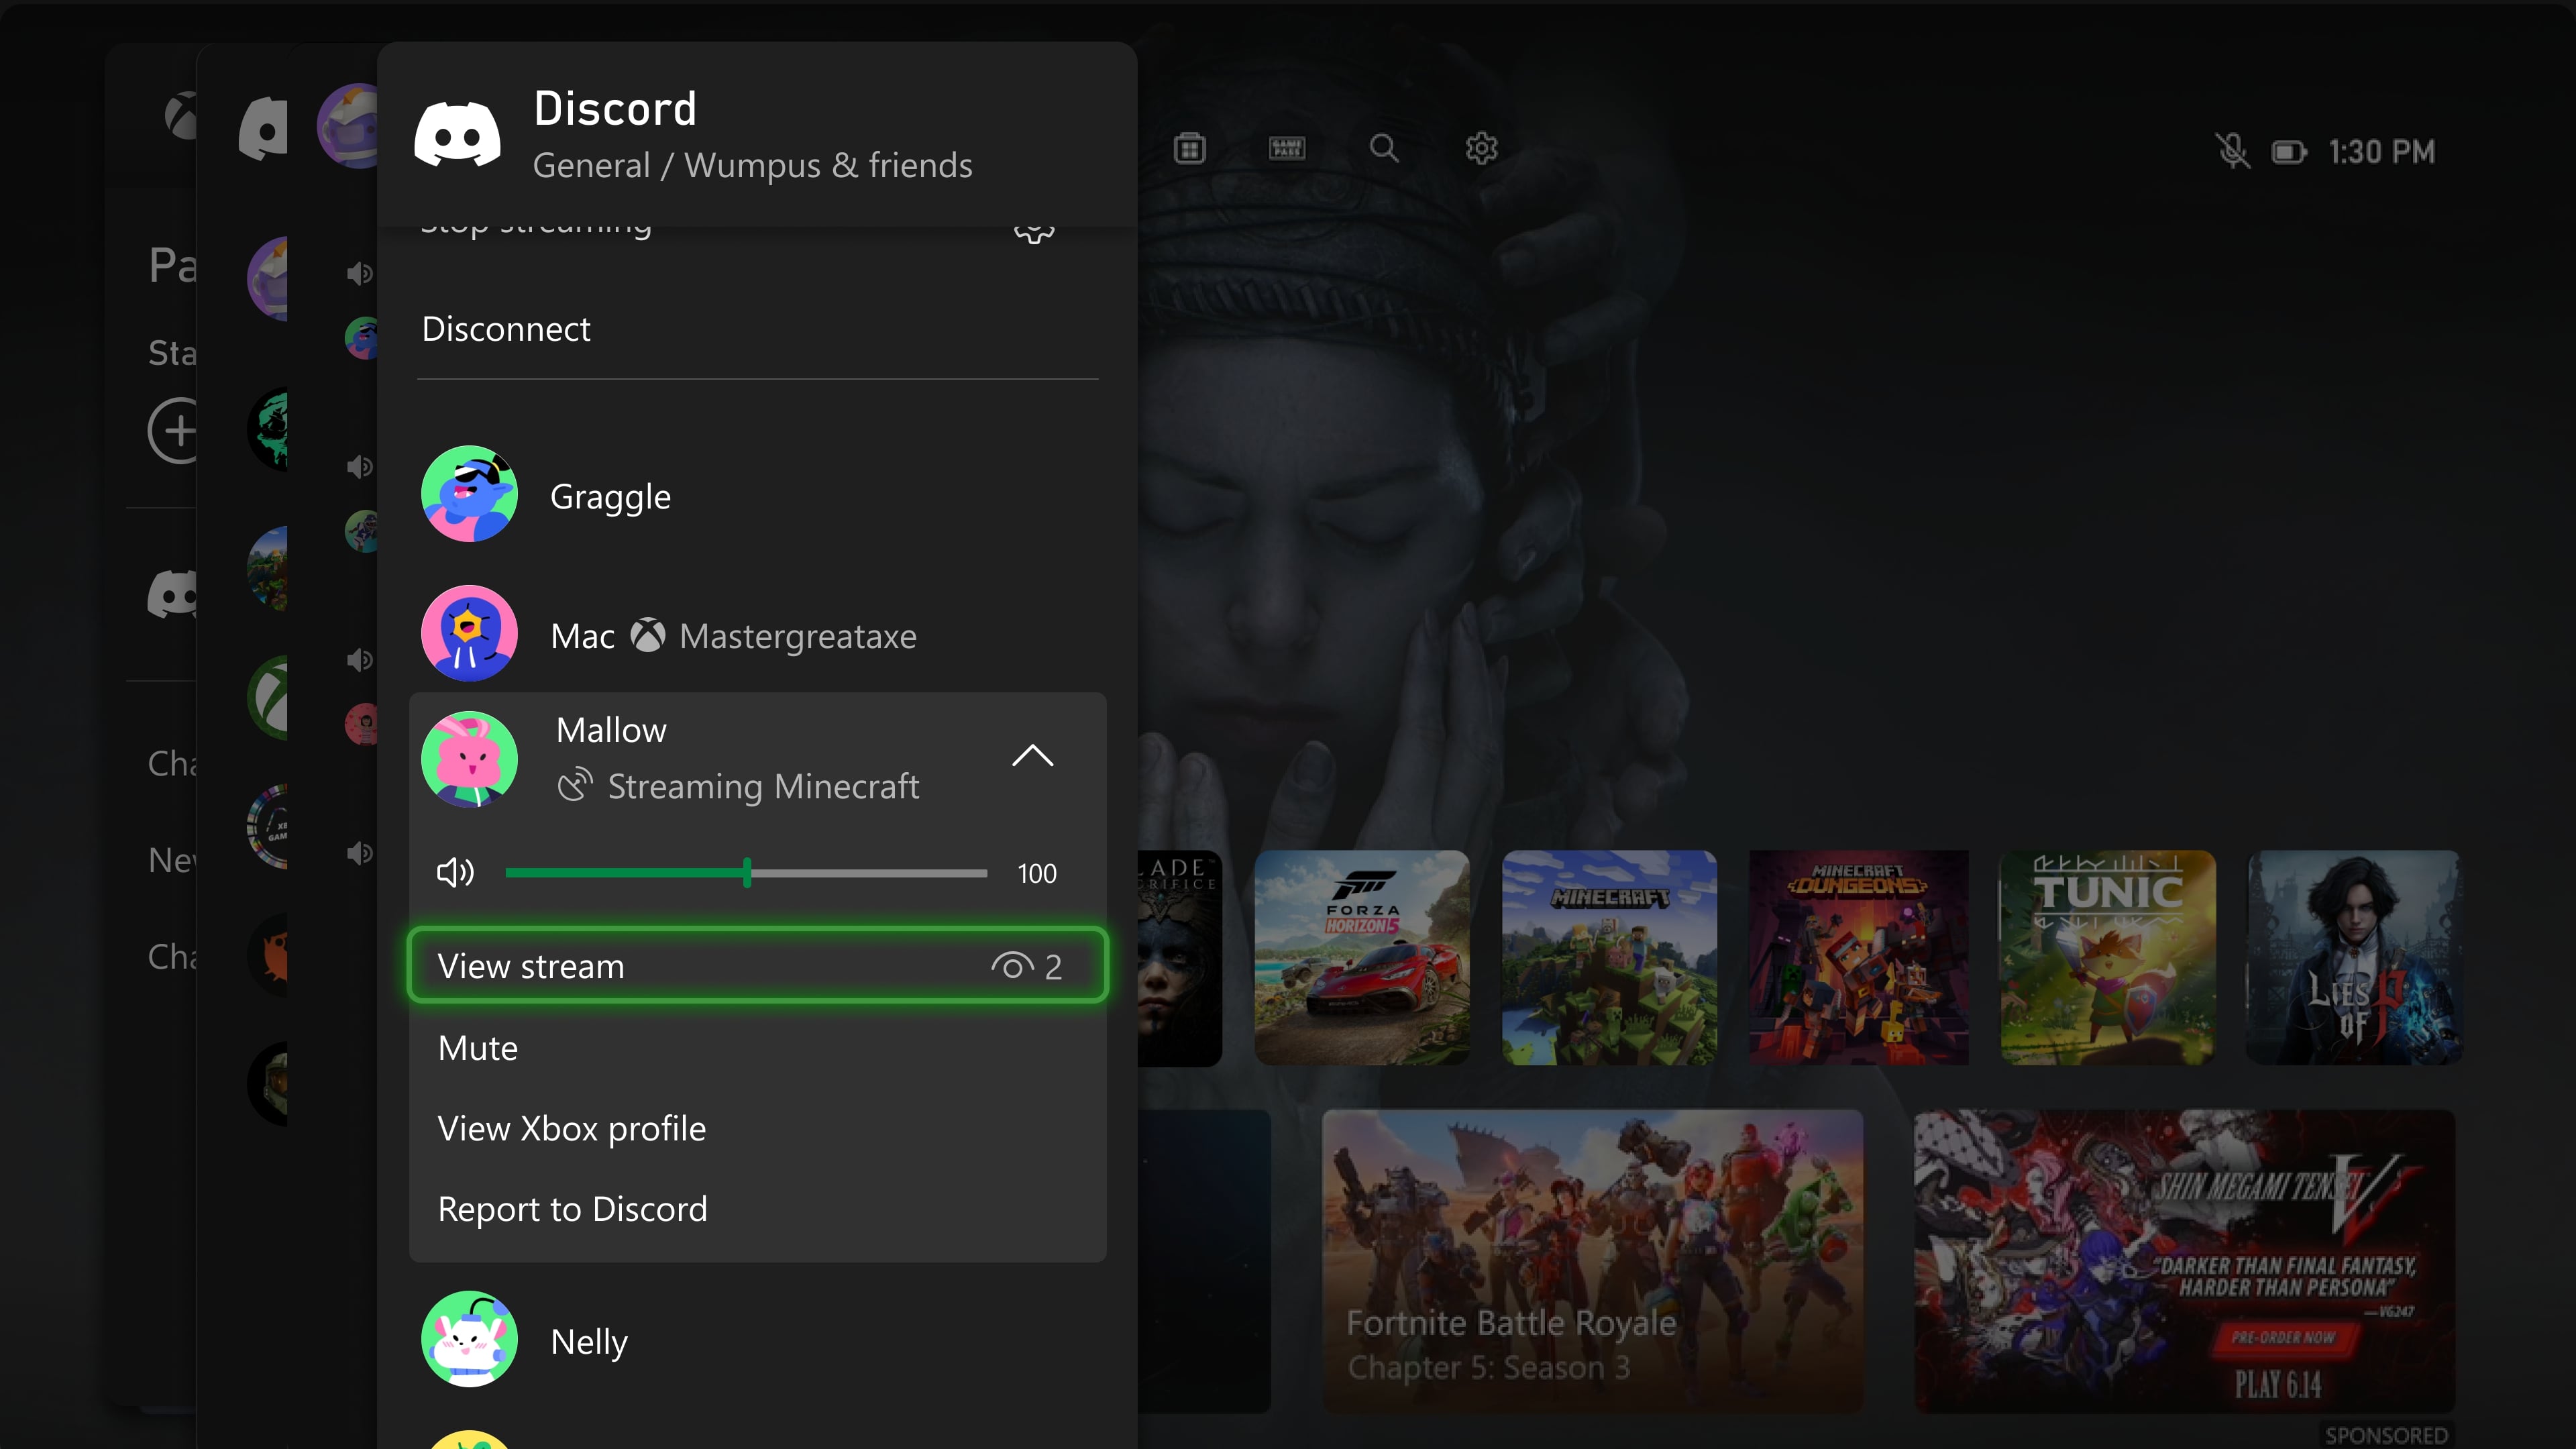 Discord on Xbox